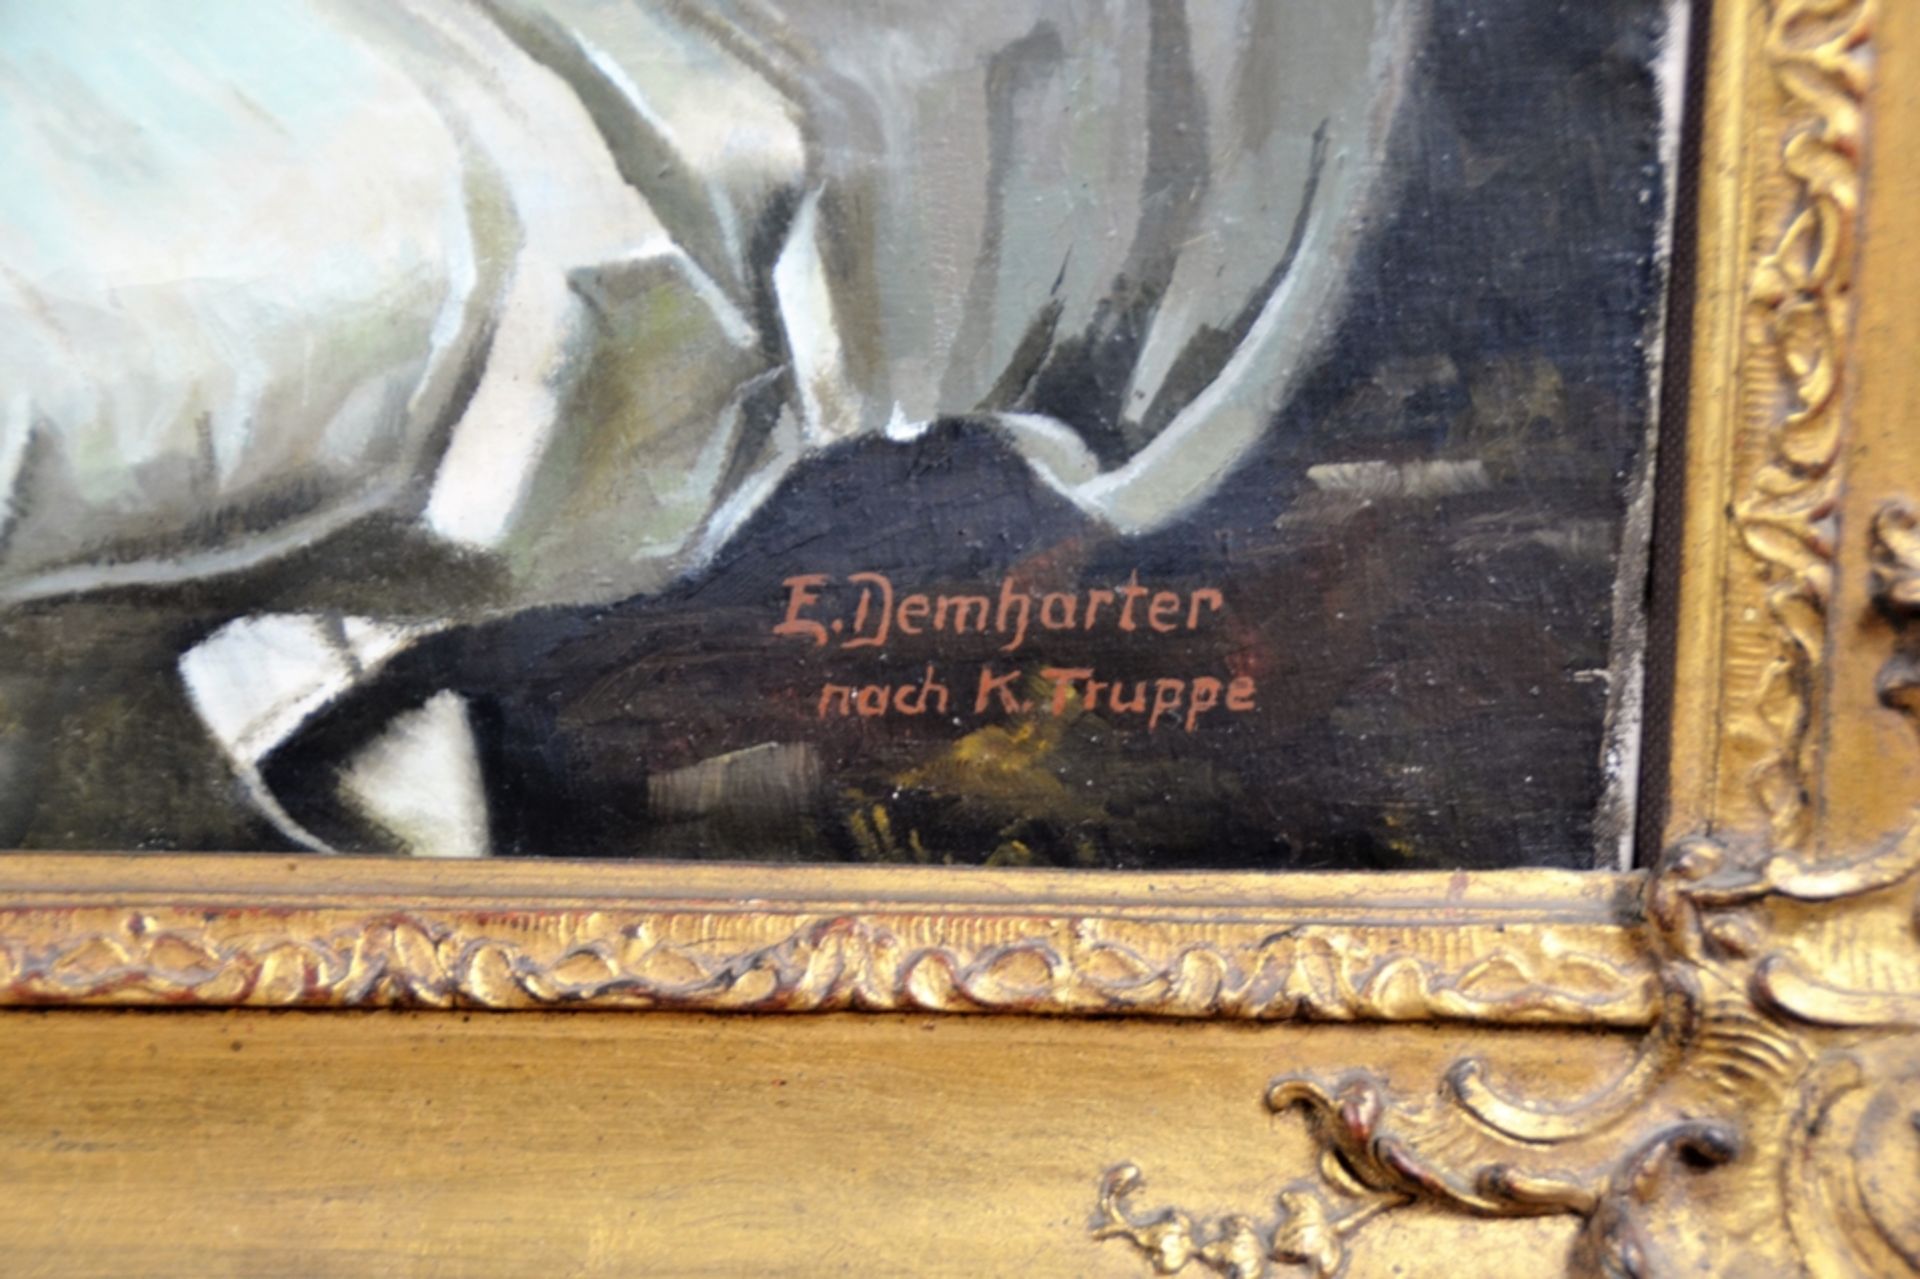 E. Demharter nach Karl Truppe "Sinnenfreude" weiblicher Akt, Öl auf Leinwand, rechts unten signiert - Image 2 of 2